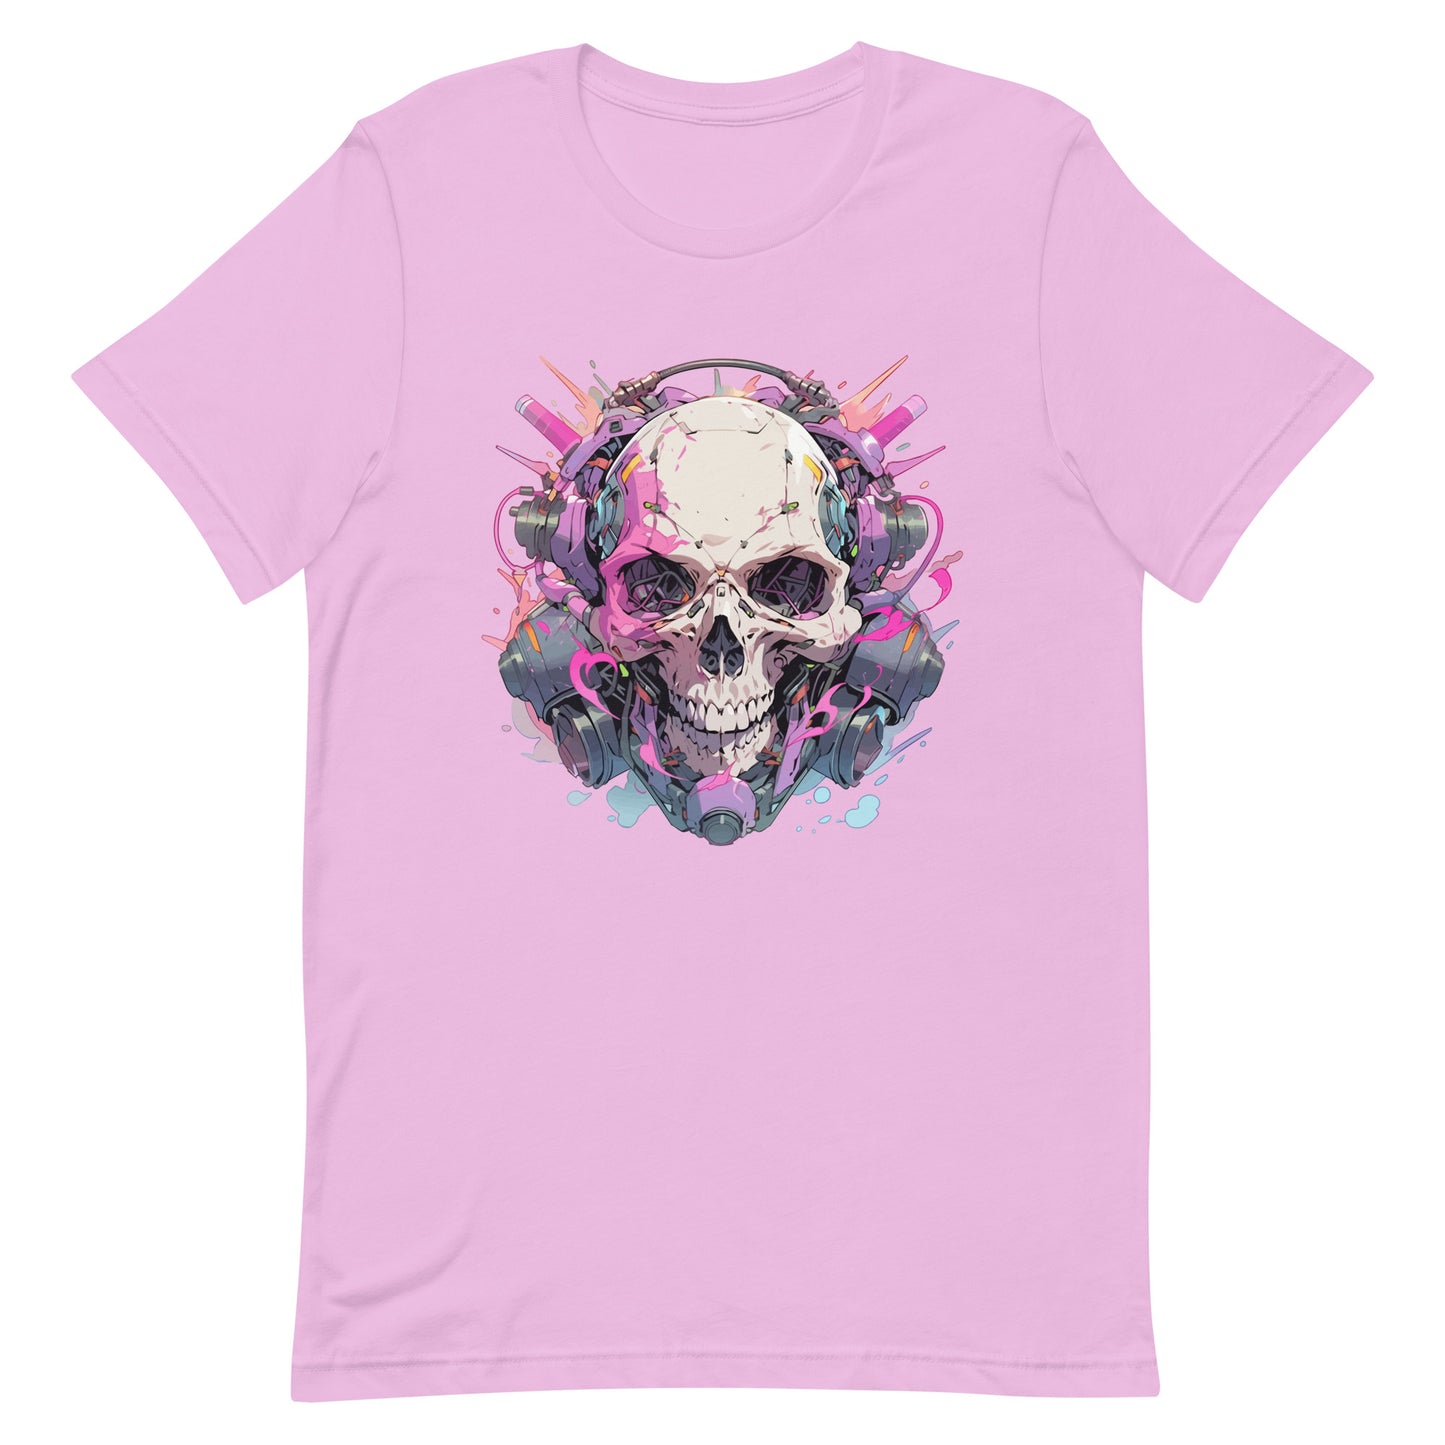 Cyberpunk illustration, Skull in gas mask, Fantastic head bones, Horror fantasy mind, Cyber hellish technology - Unisex t-shirt